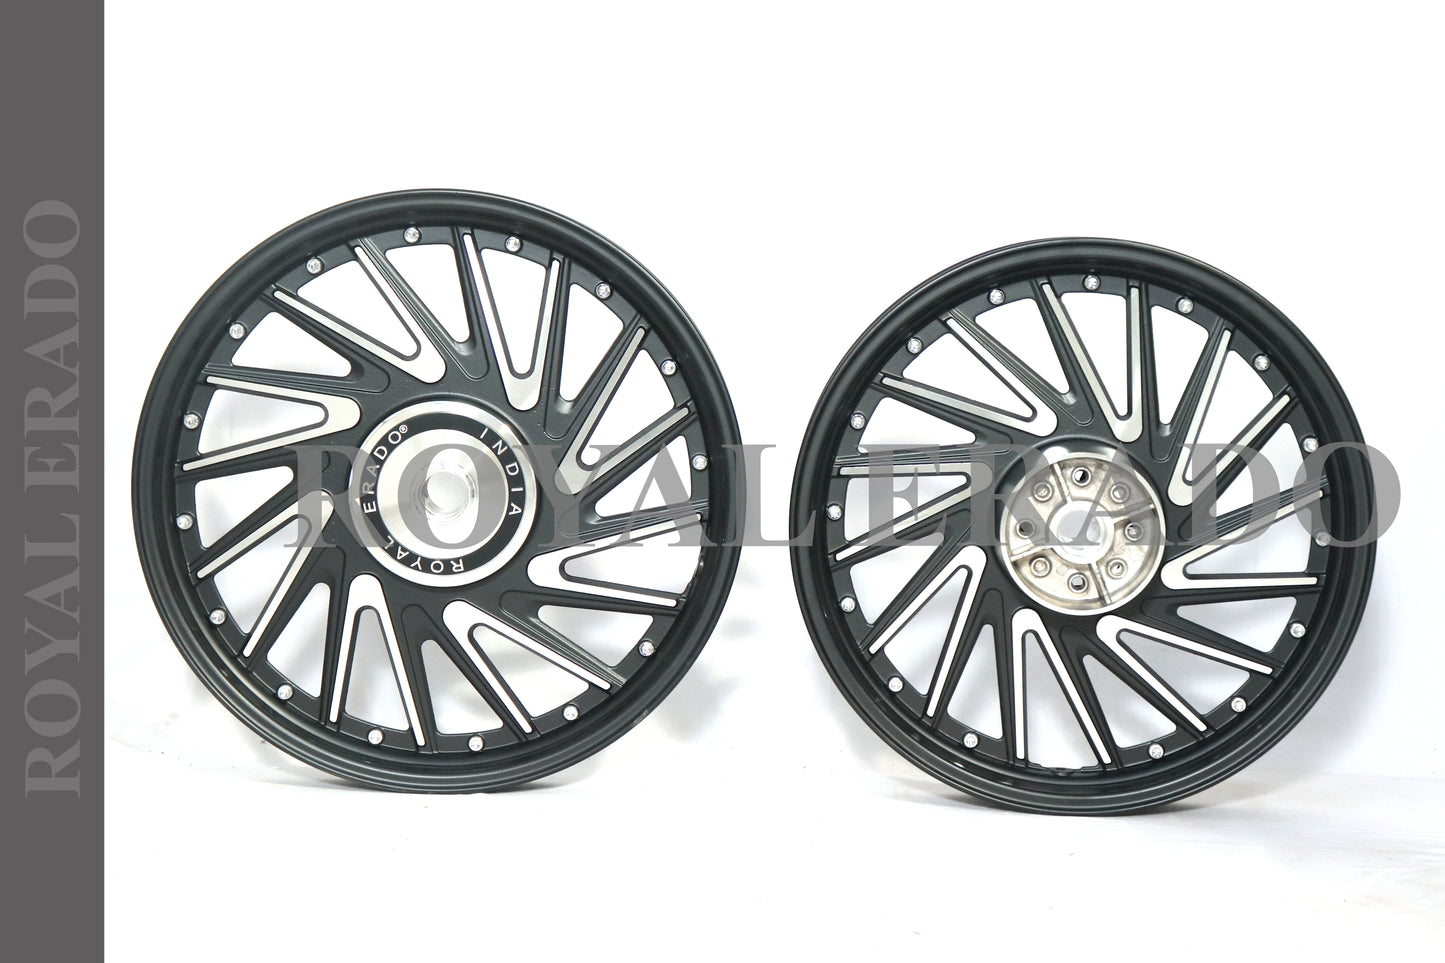 16 Spokes CROSS V DESIGN alloy wheel for thunderbird and classic double disc